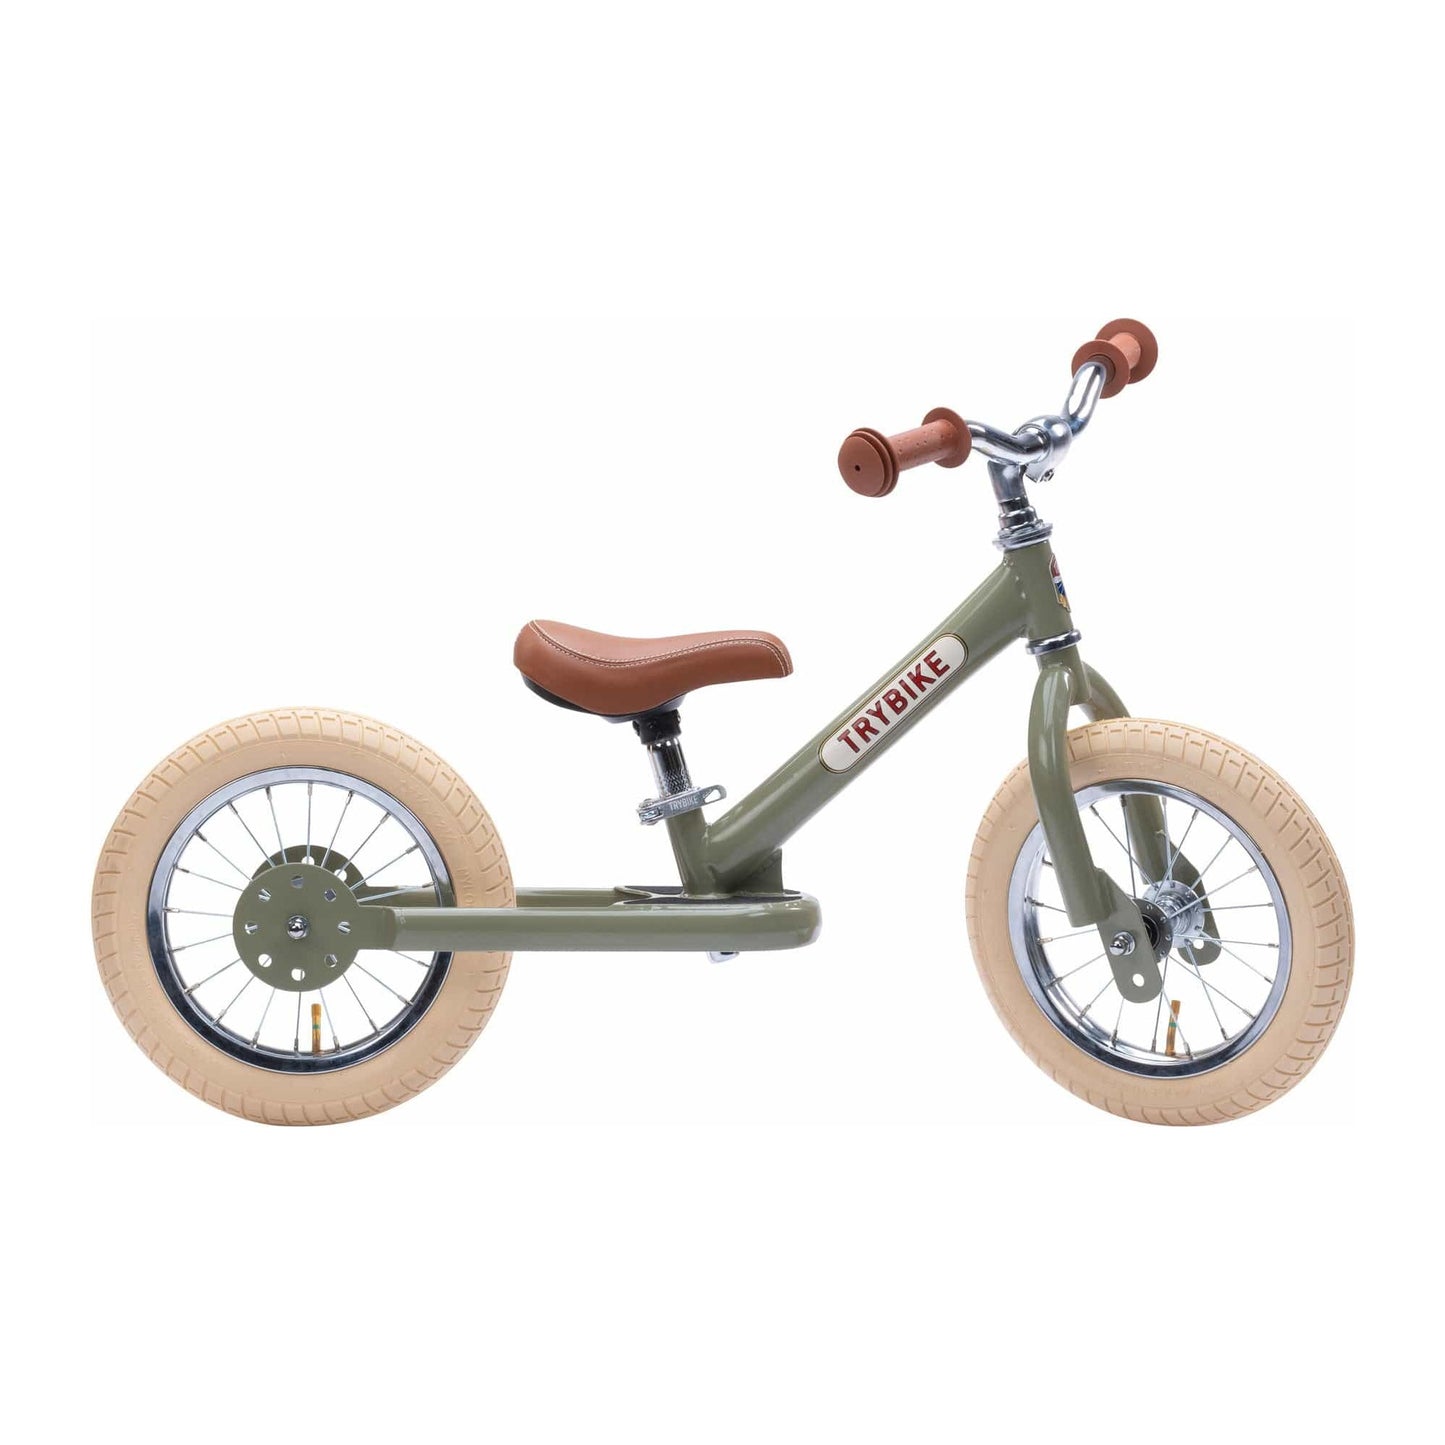 TryBike - Steel 2 in 1 Balance Trike Bike - Vintage Green stage 2 side